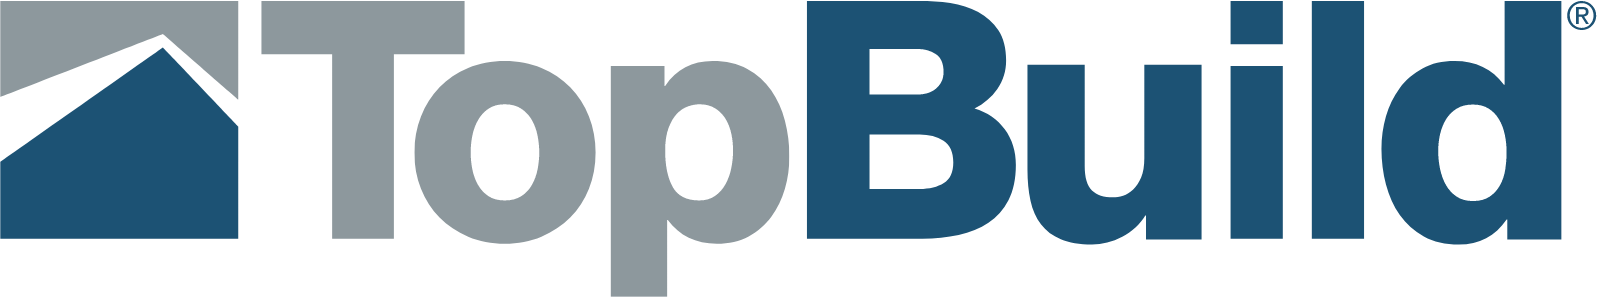 TopBuild logo large (transparent PNG)